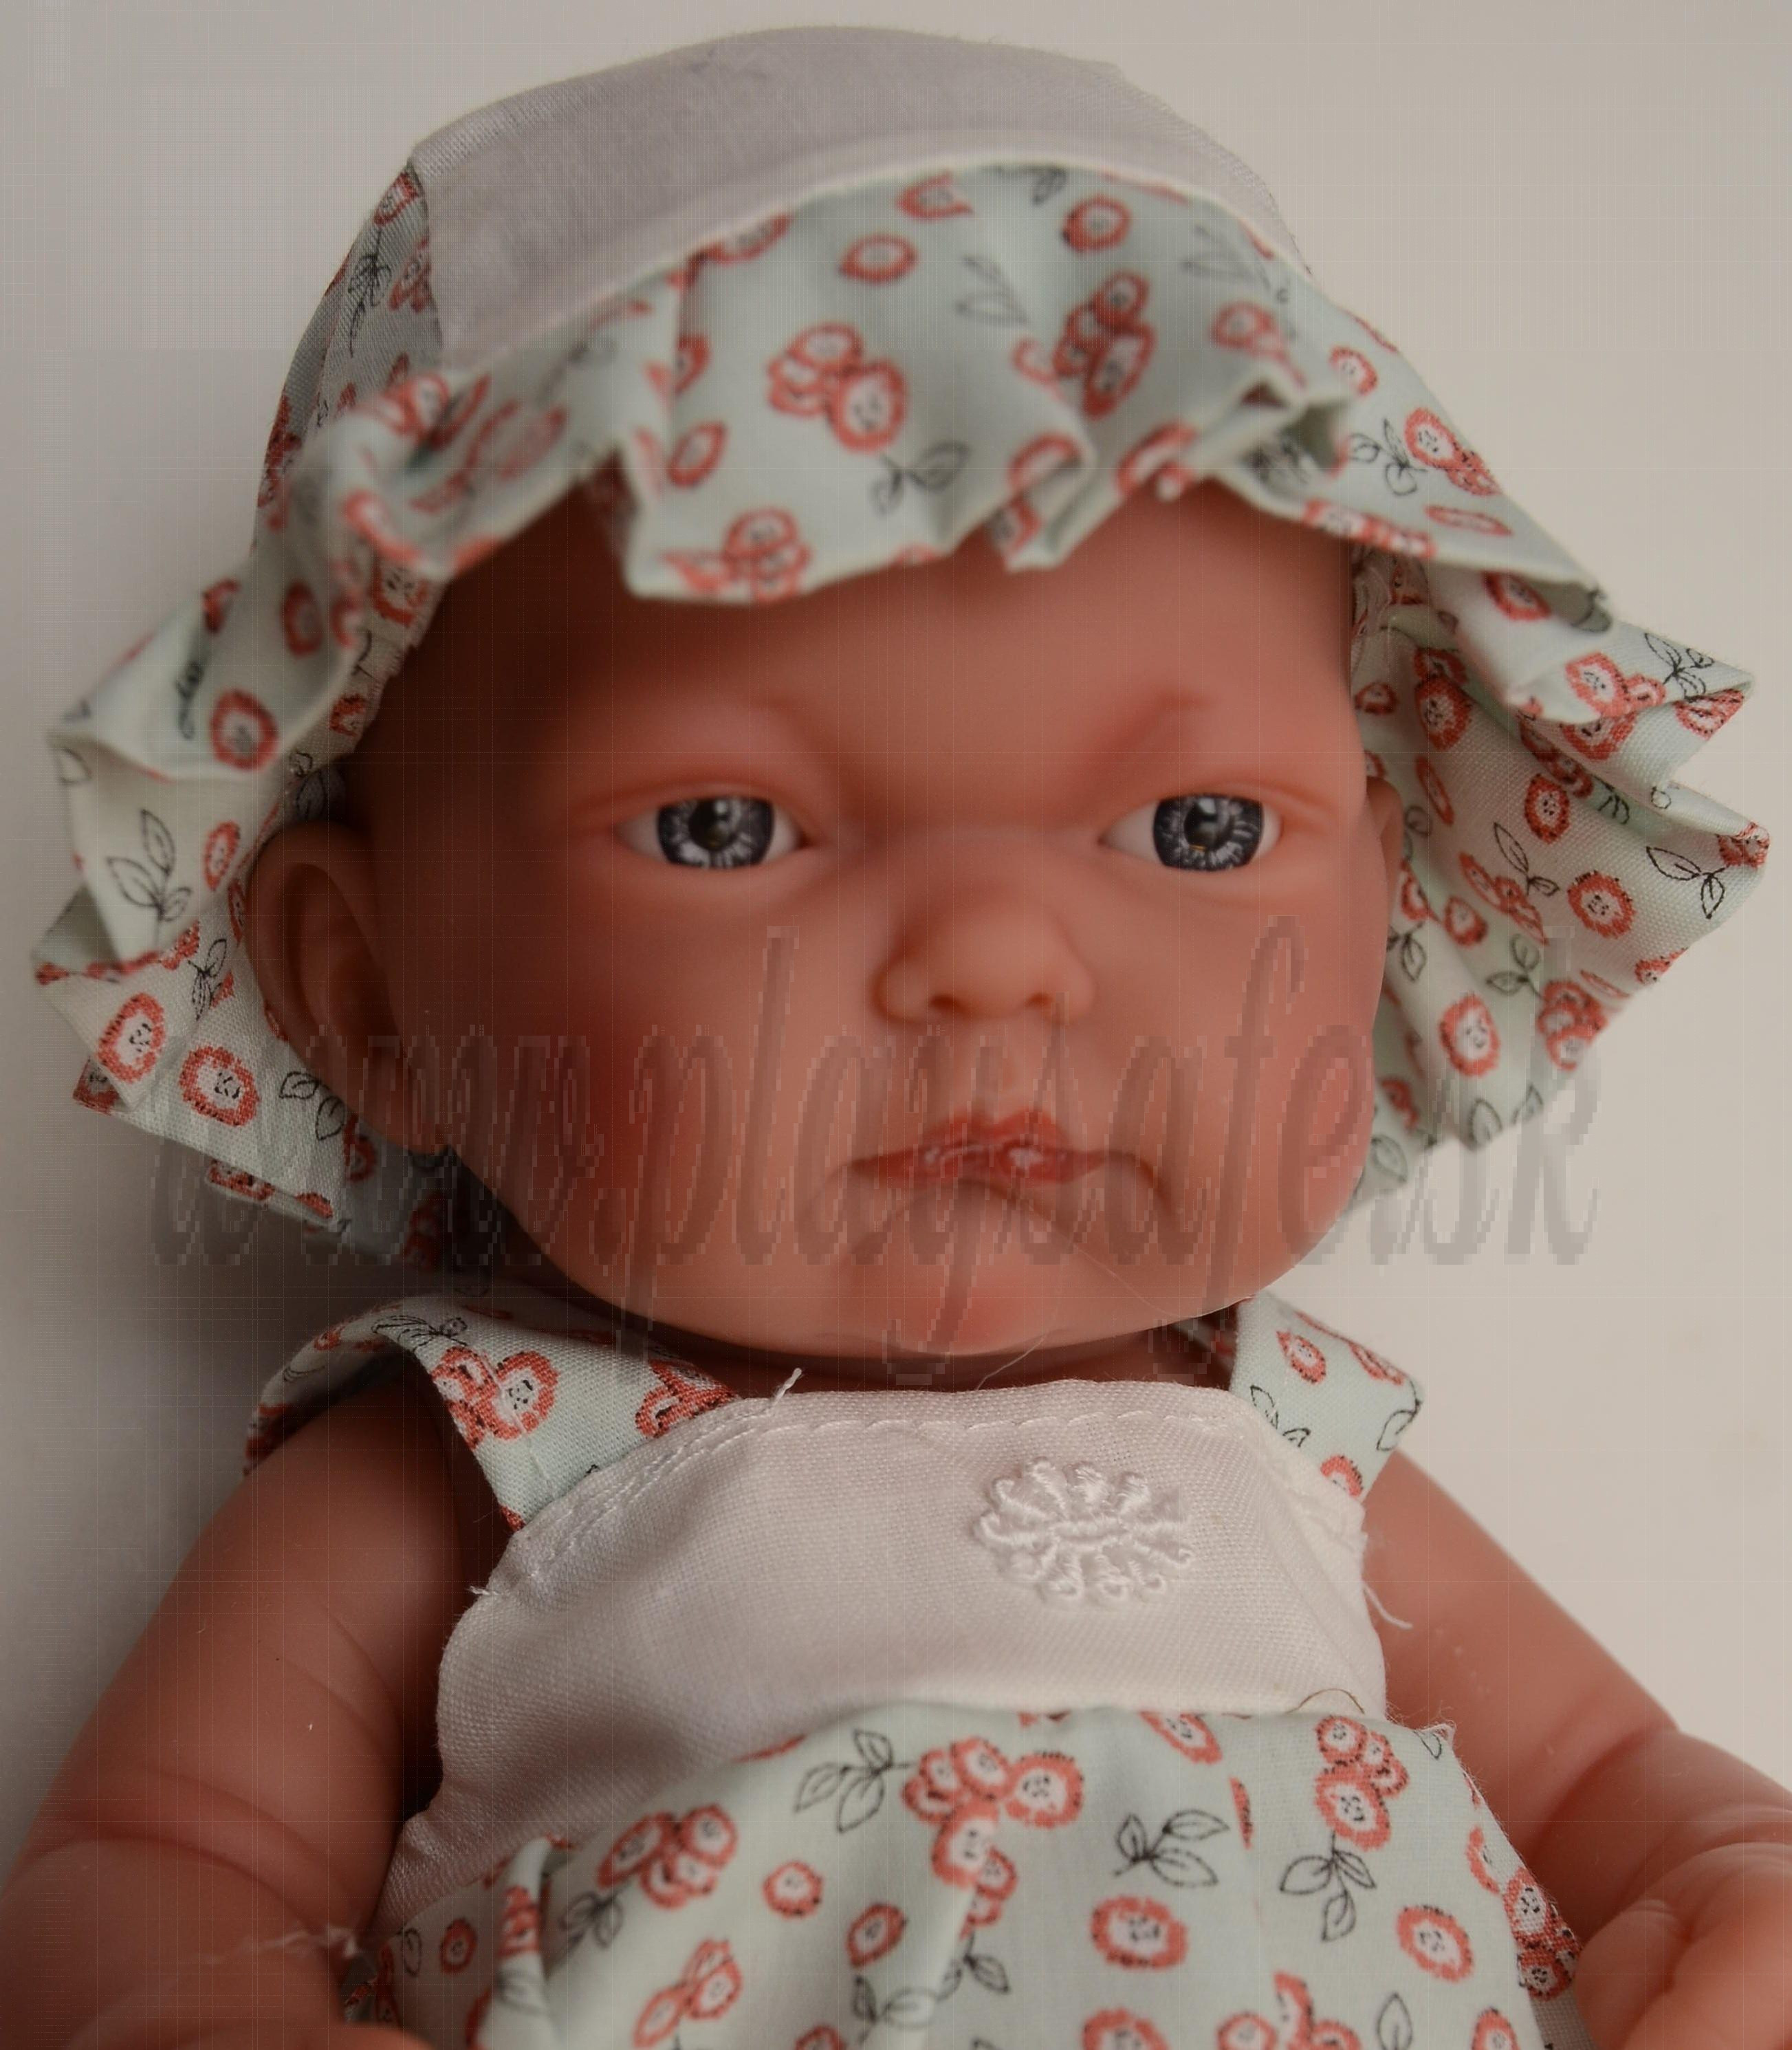 Antonio Juan Pitu Expositor Baby Doll, 26cm whiteblue dress